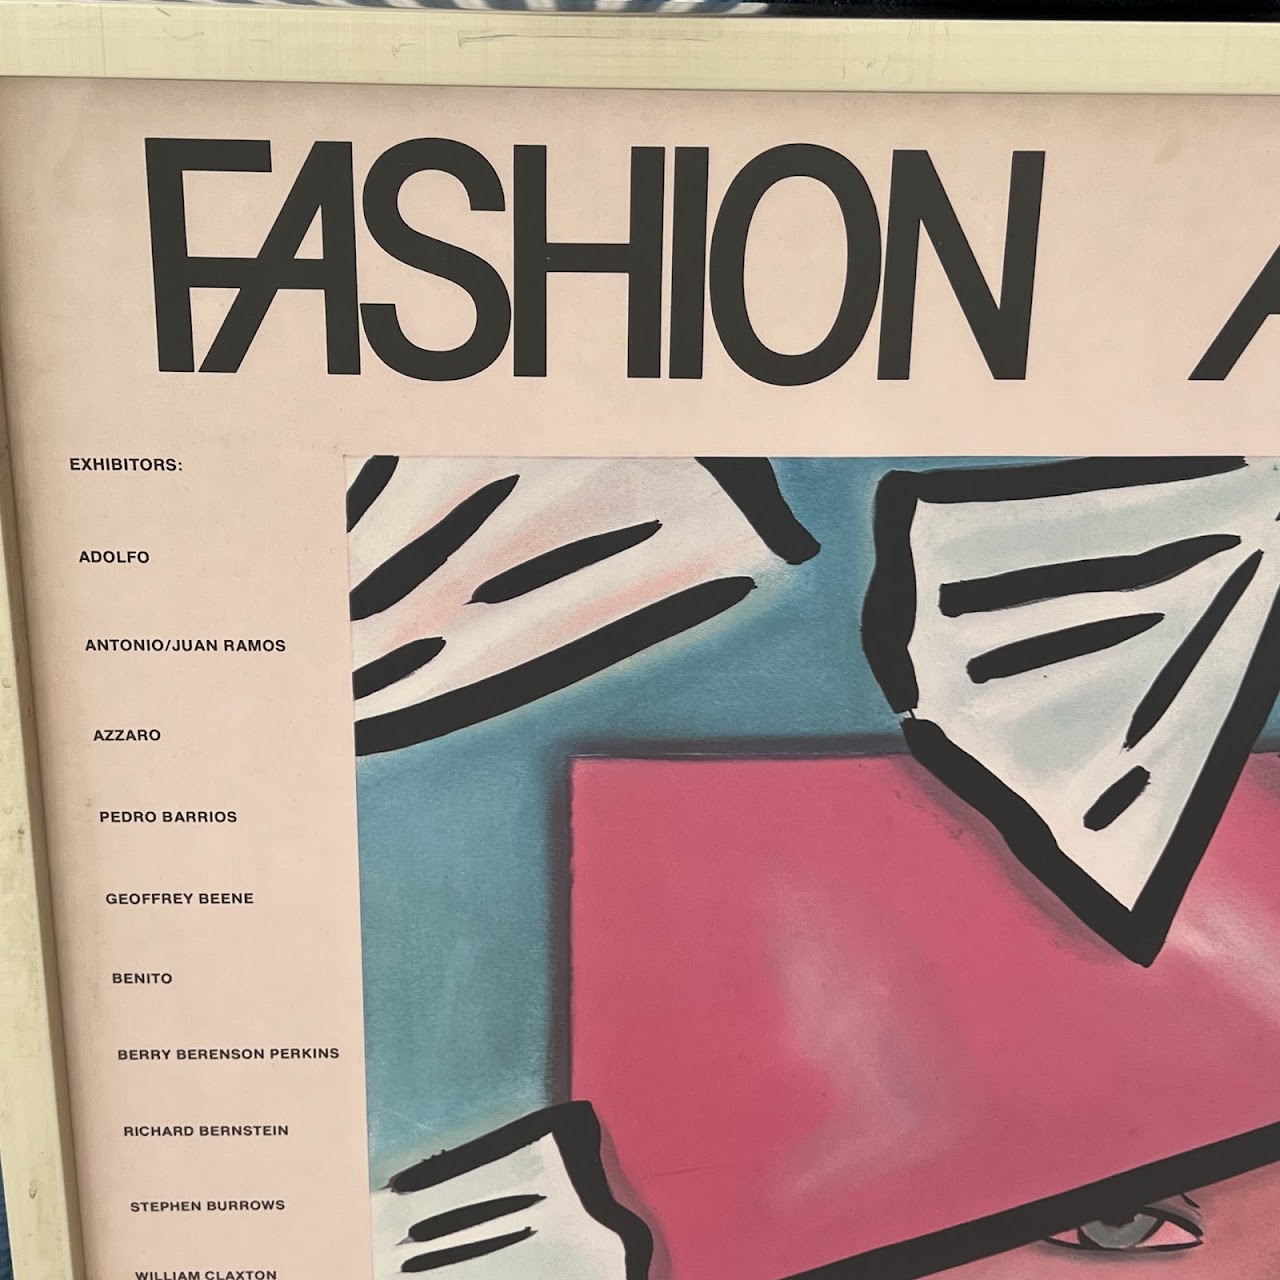 Rizzoli Gallery 'Fashion as Fantasy' Vintage Exhibition Poster